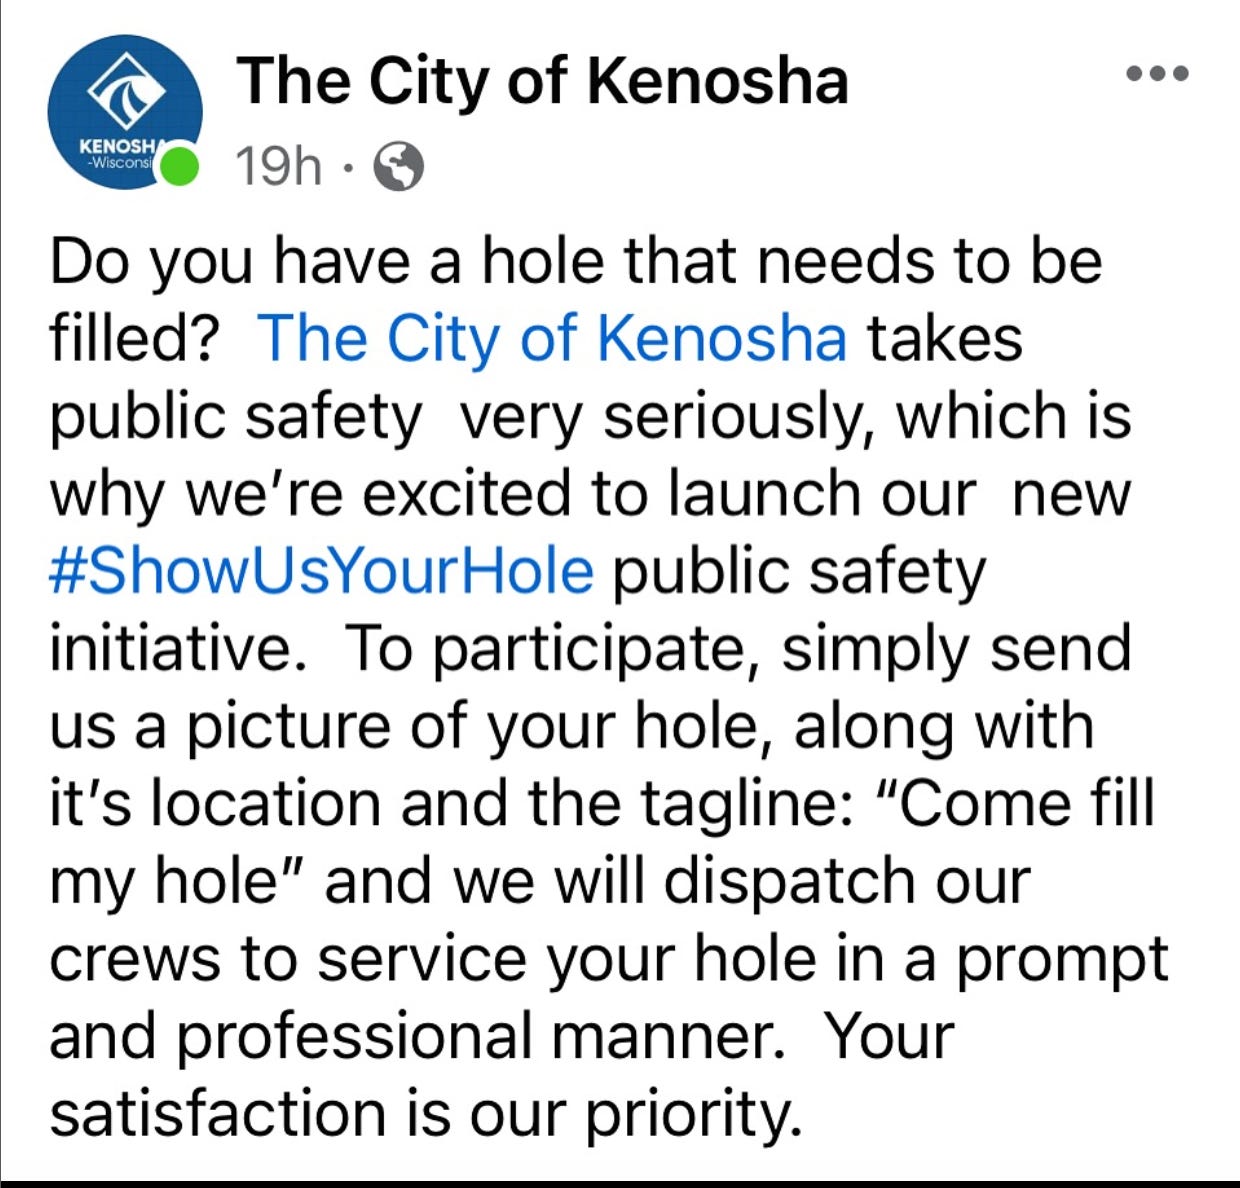 A fake City of Kenosha municipal page making multiple puns about filling "holes" with the hashtag #showusyourhole